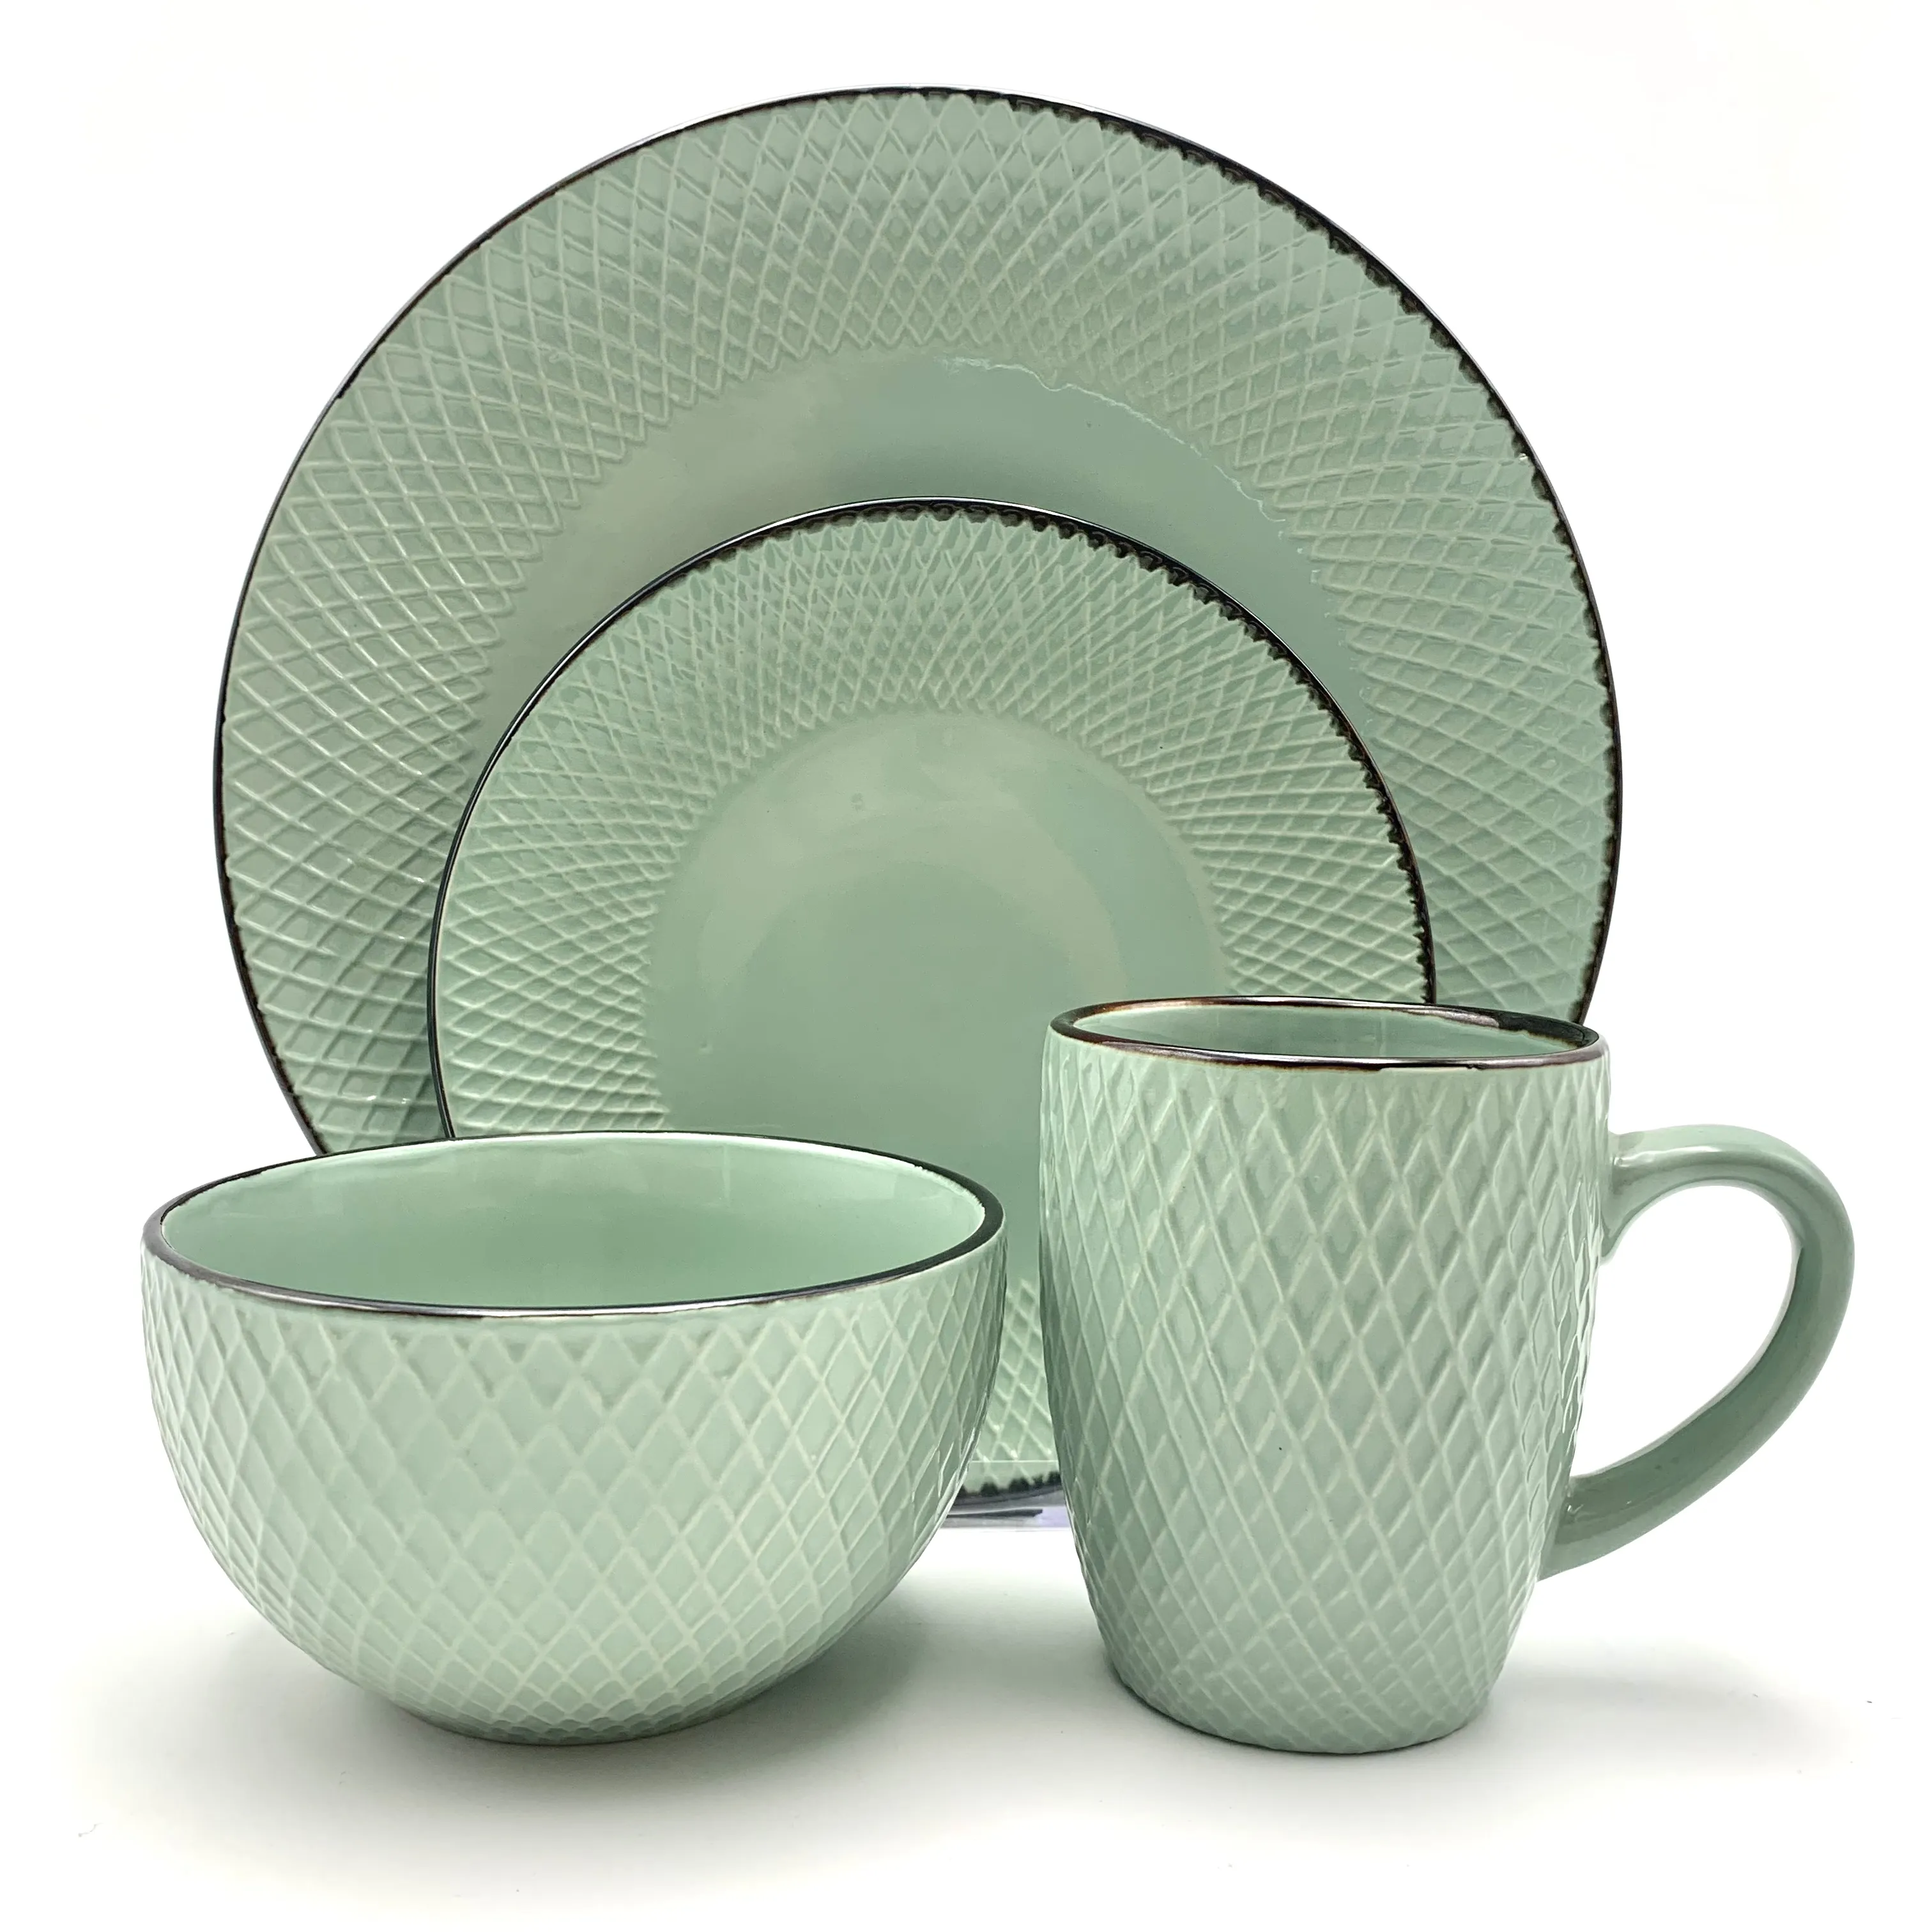 Set peralatan makan keramik harian desain relief hijau muda elegan gaya Skandinavia